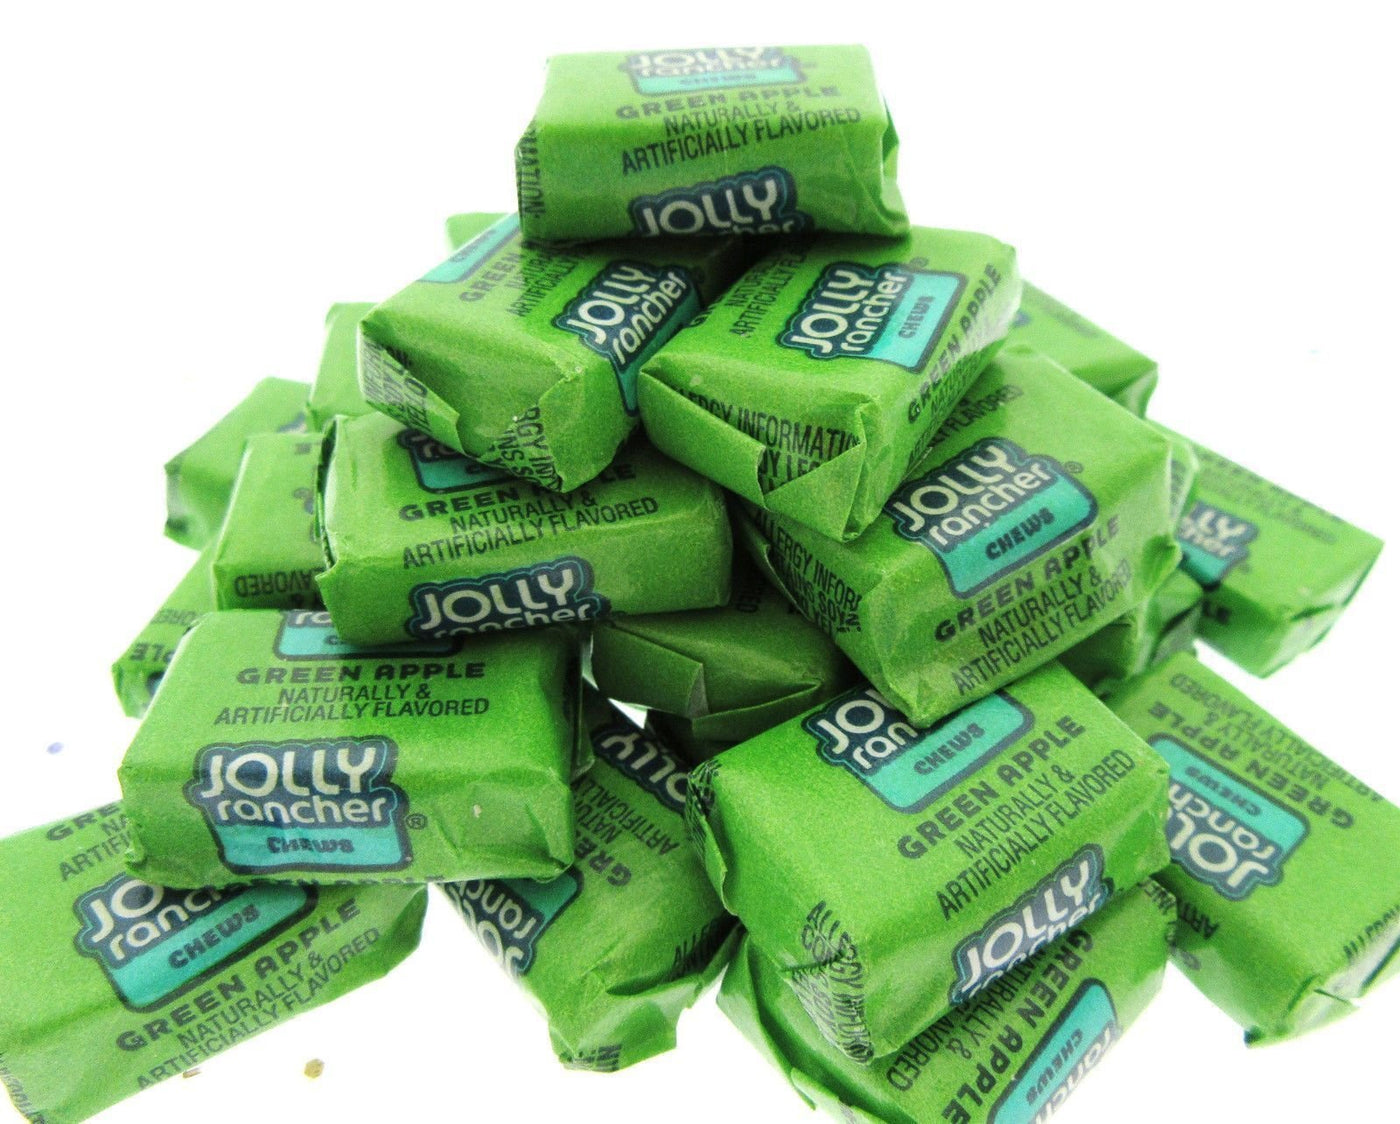 Jolly Rancher Green Apple Chews ~ 8oz American Favorite candy ~ Half Pound sweet